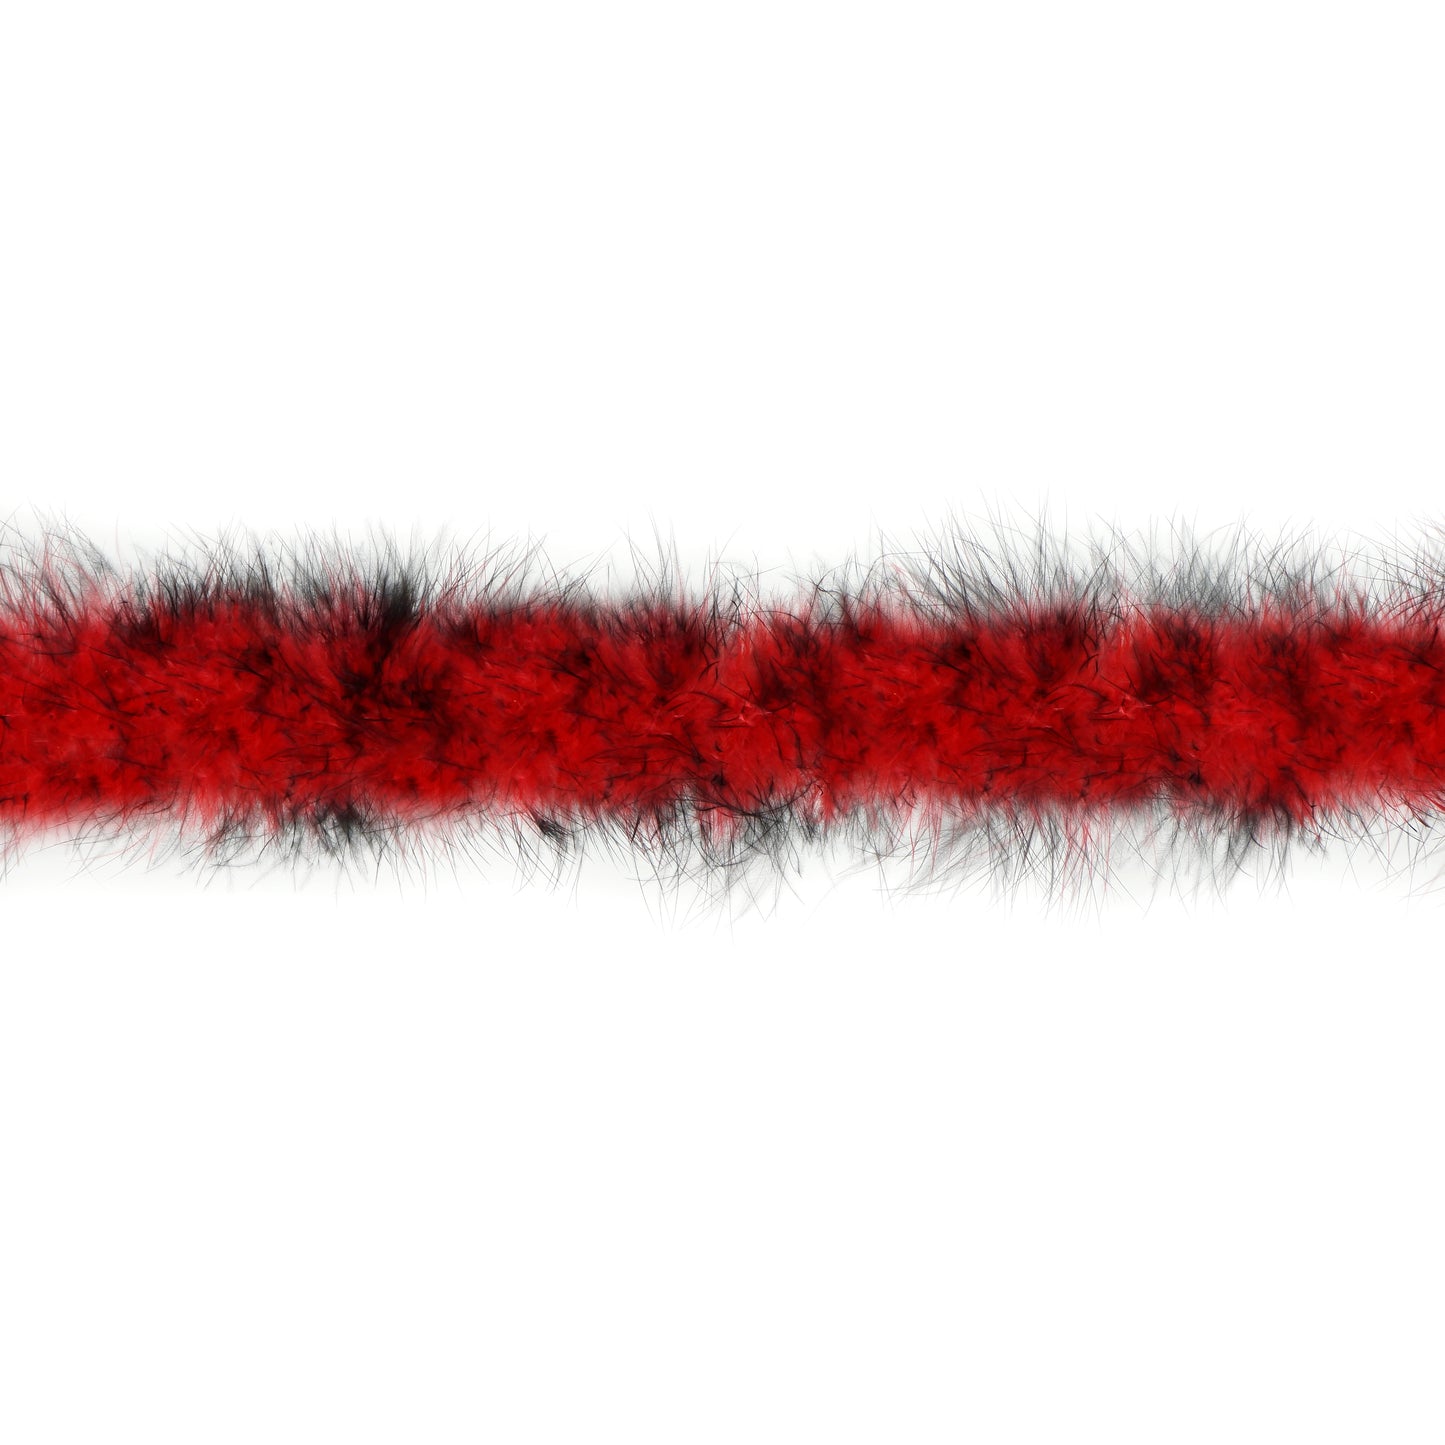 Marabou Feather Boa - Mediumweight - Tipped - Red/Black